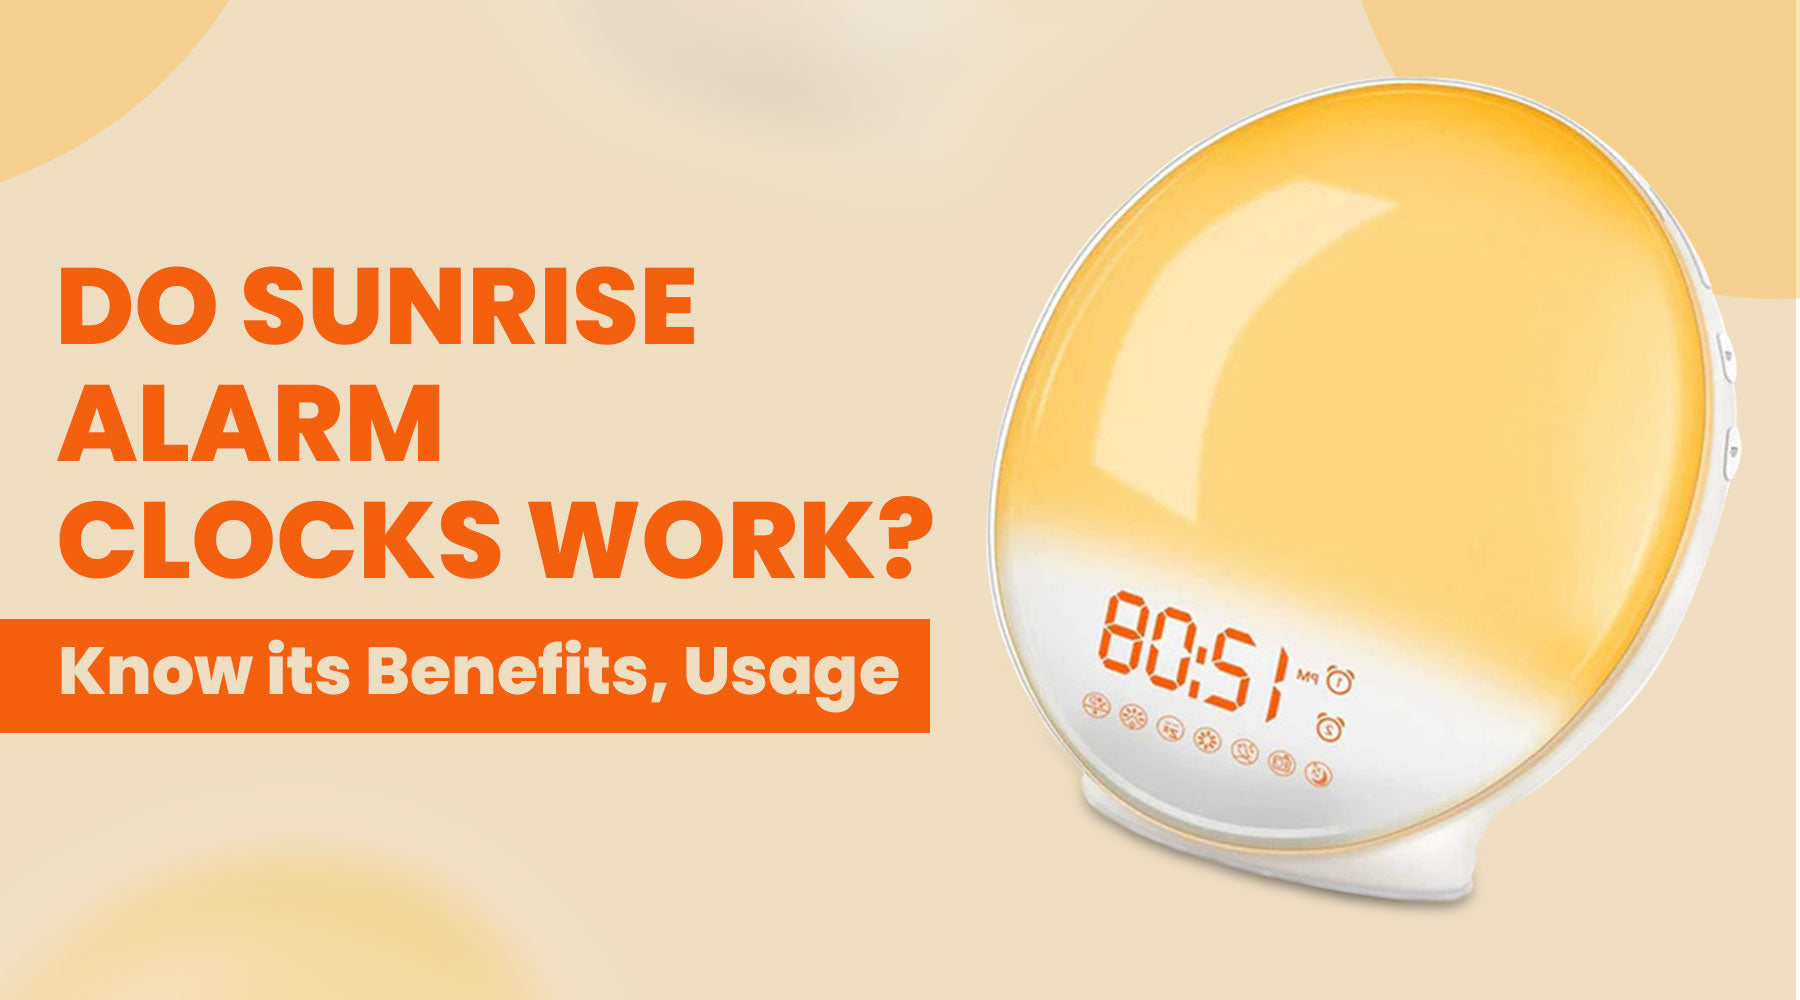 Do sunrise alarm clocks work? Know its Benefits, Usage